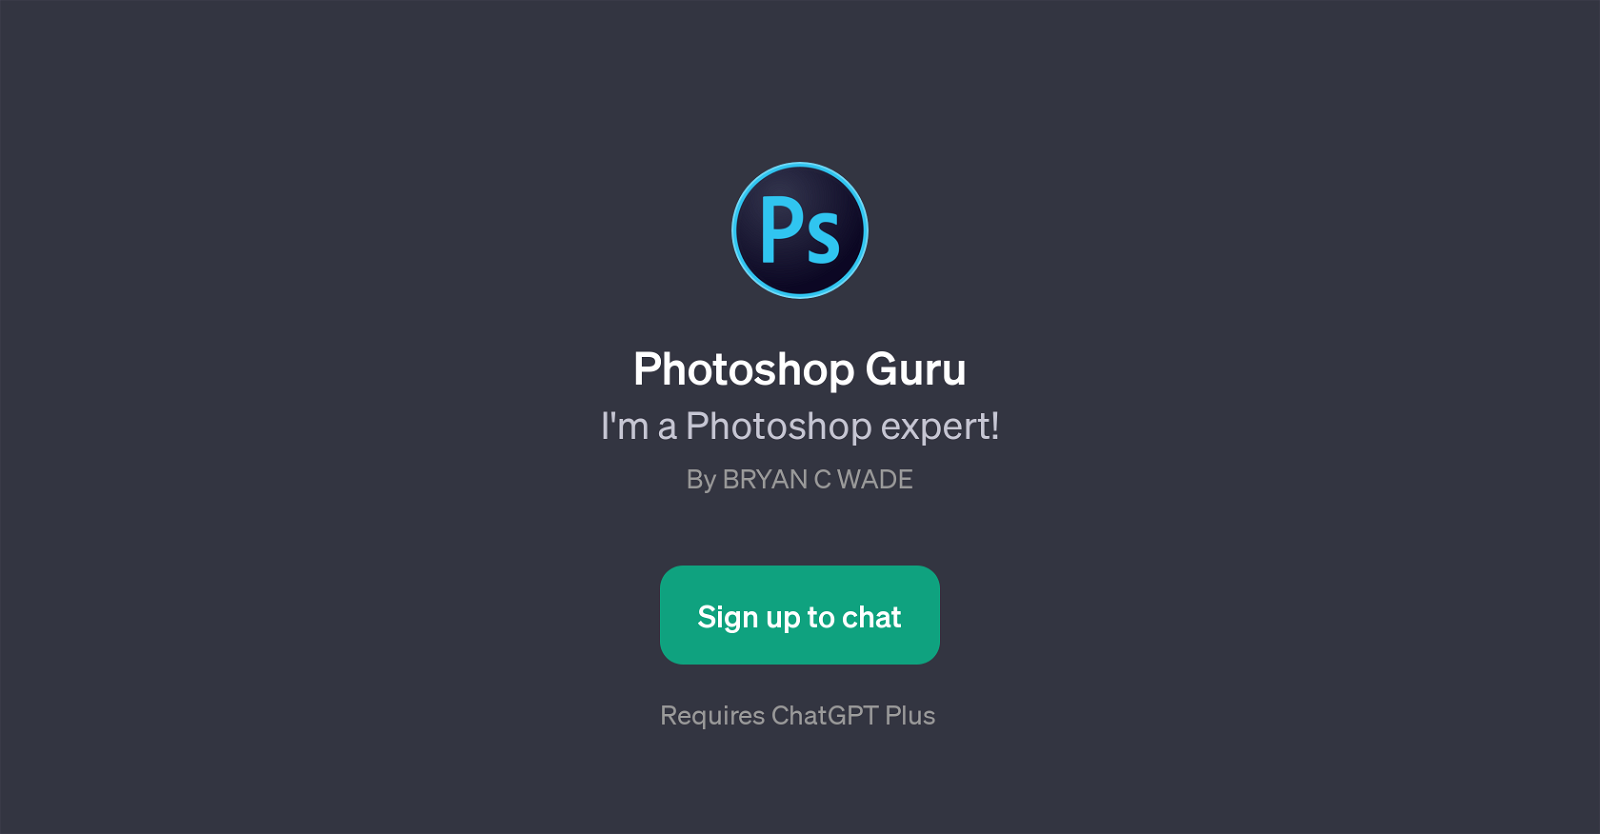 Photoshop Guru website